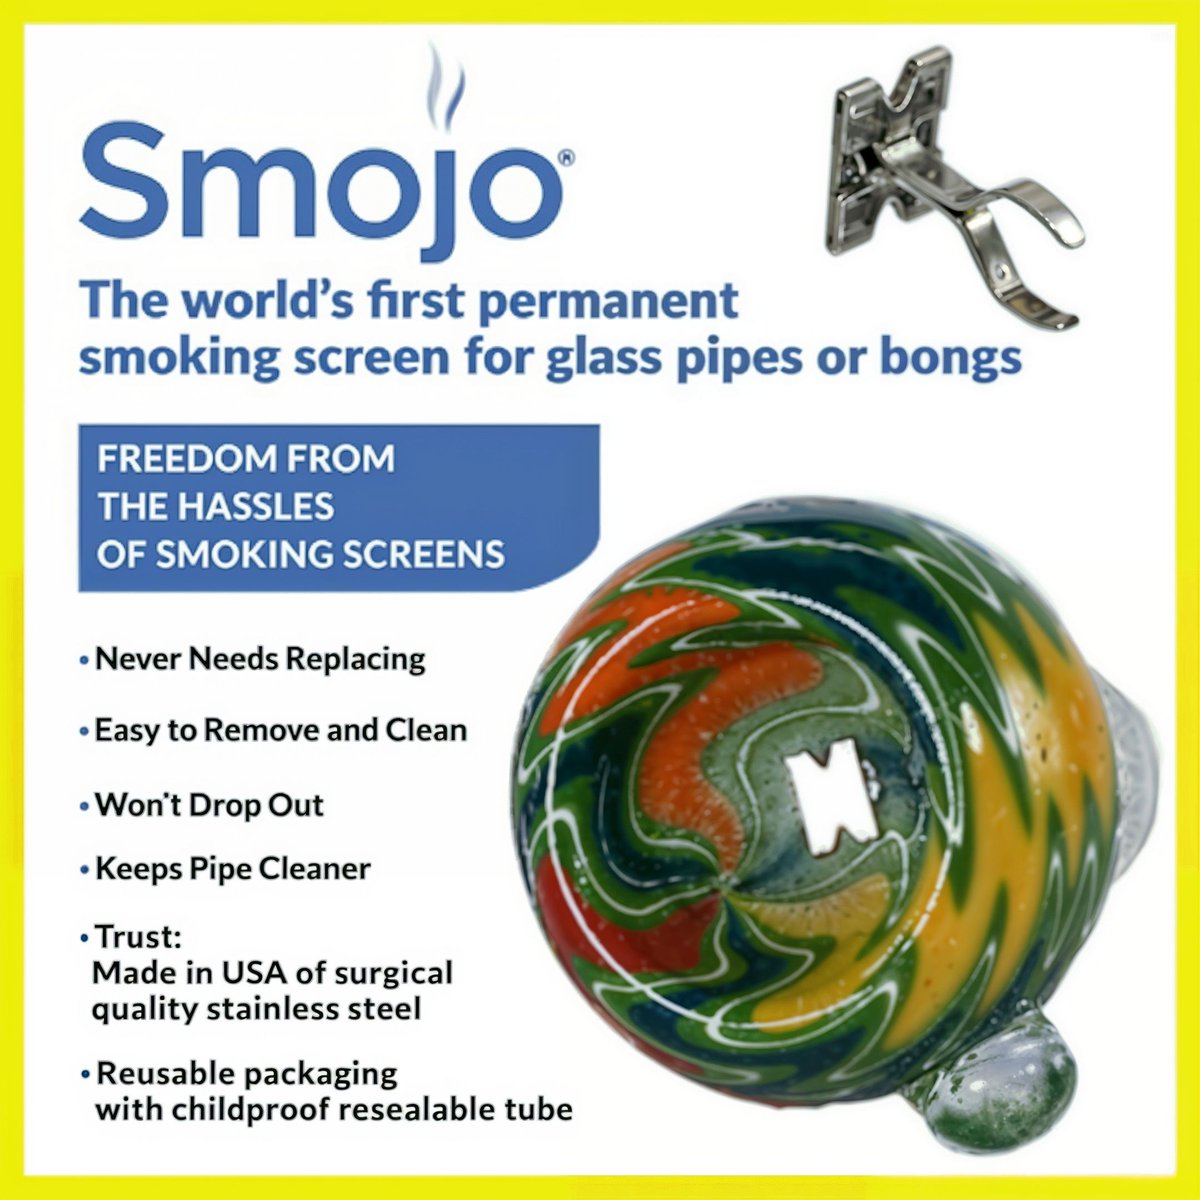 Smojo. Freedom from the hassles of smoking screens. #smojoscreen